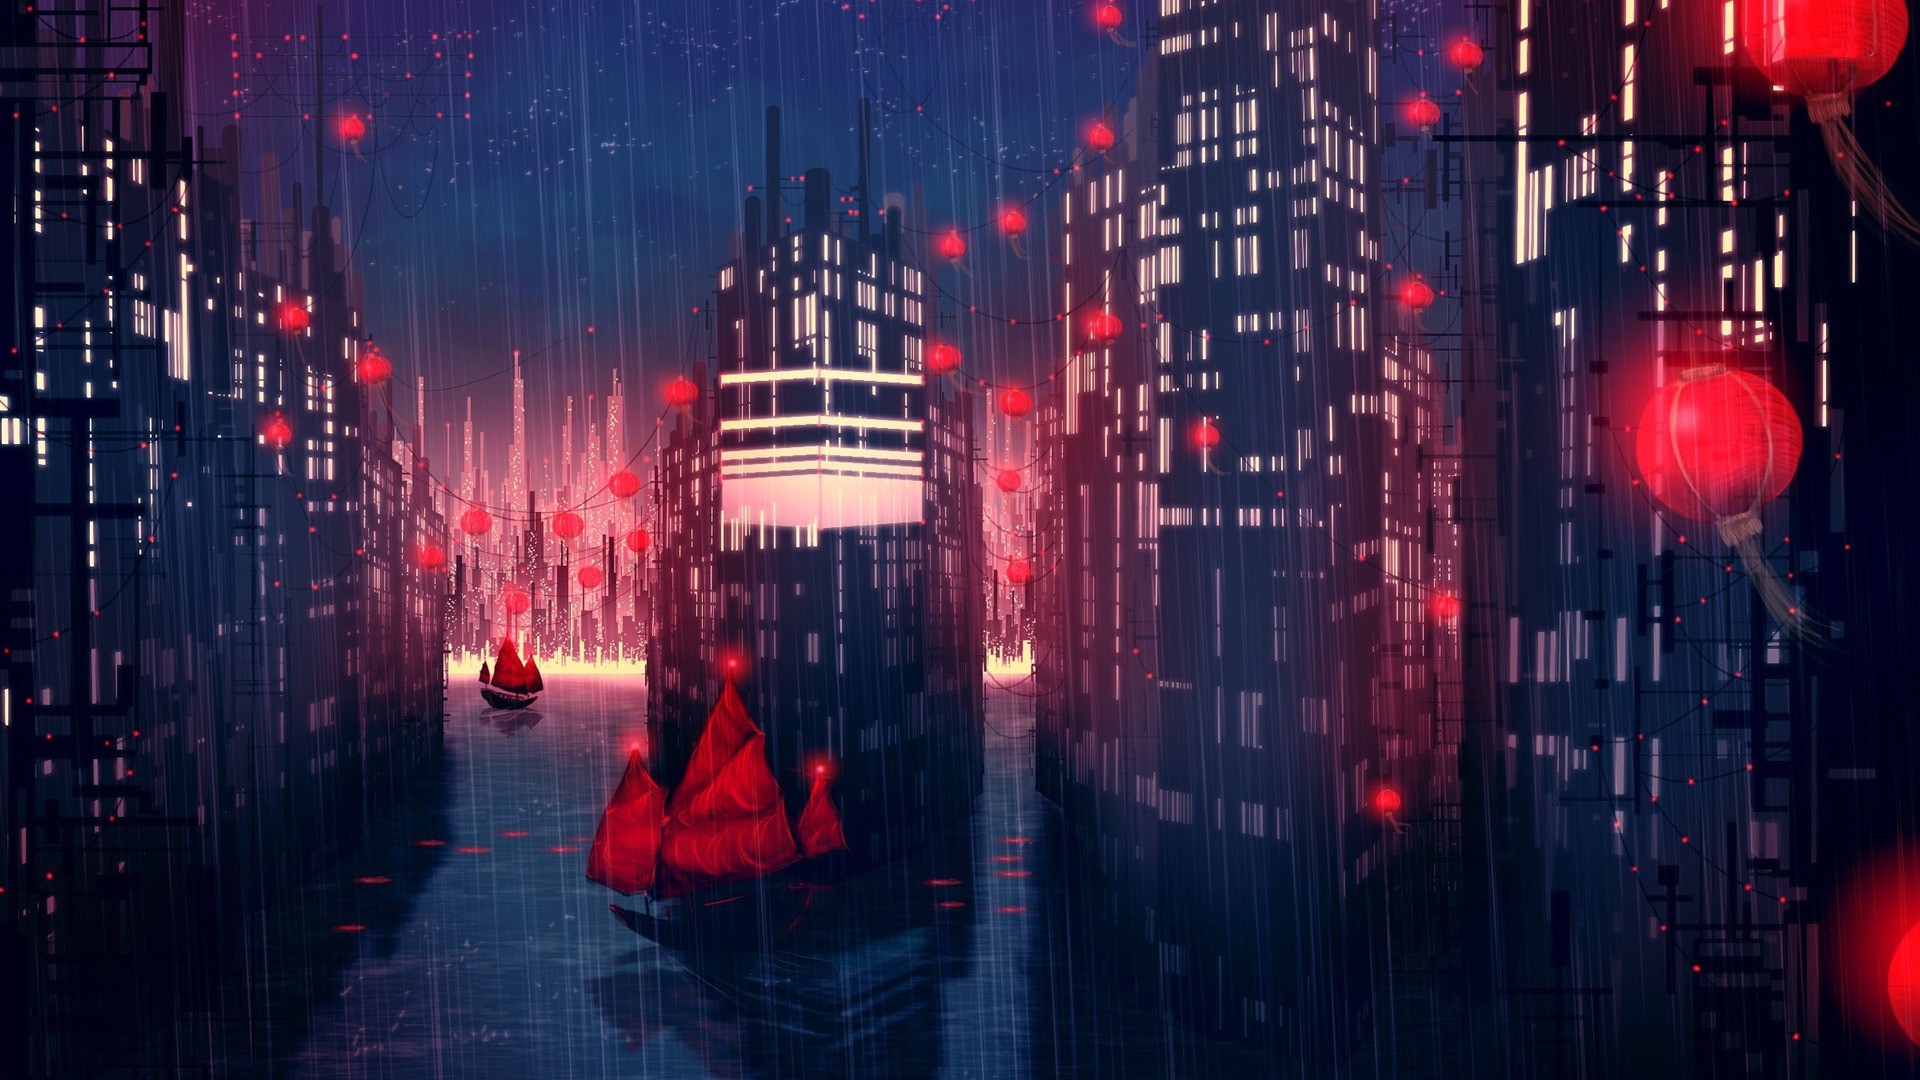 Cityscape Concept Art City Rain Night Artwork Red Lantern Science Fiction Fantasy Art Boat / iPhone HD Wallpaper Background Download (png / jpg) (2022)